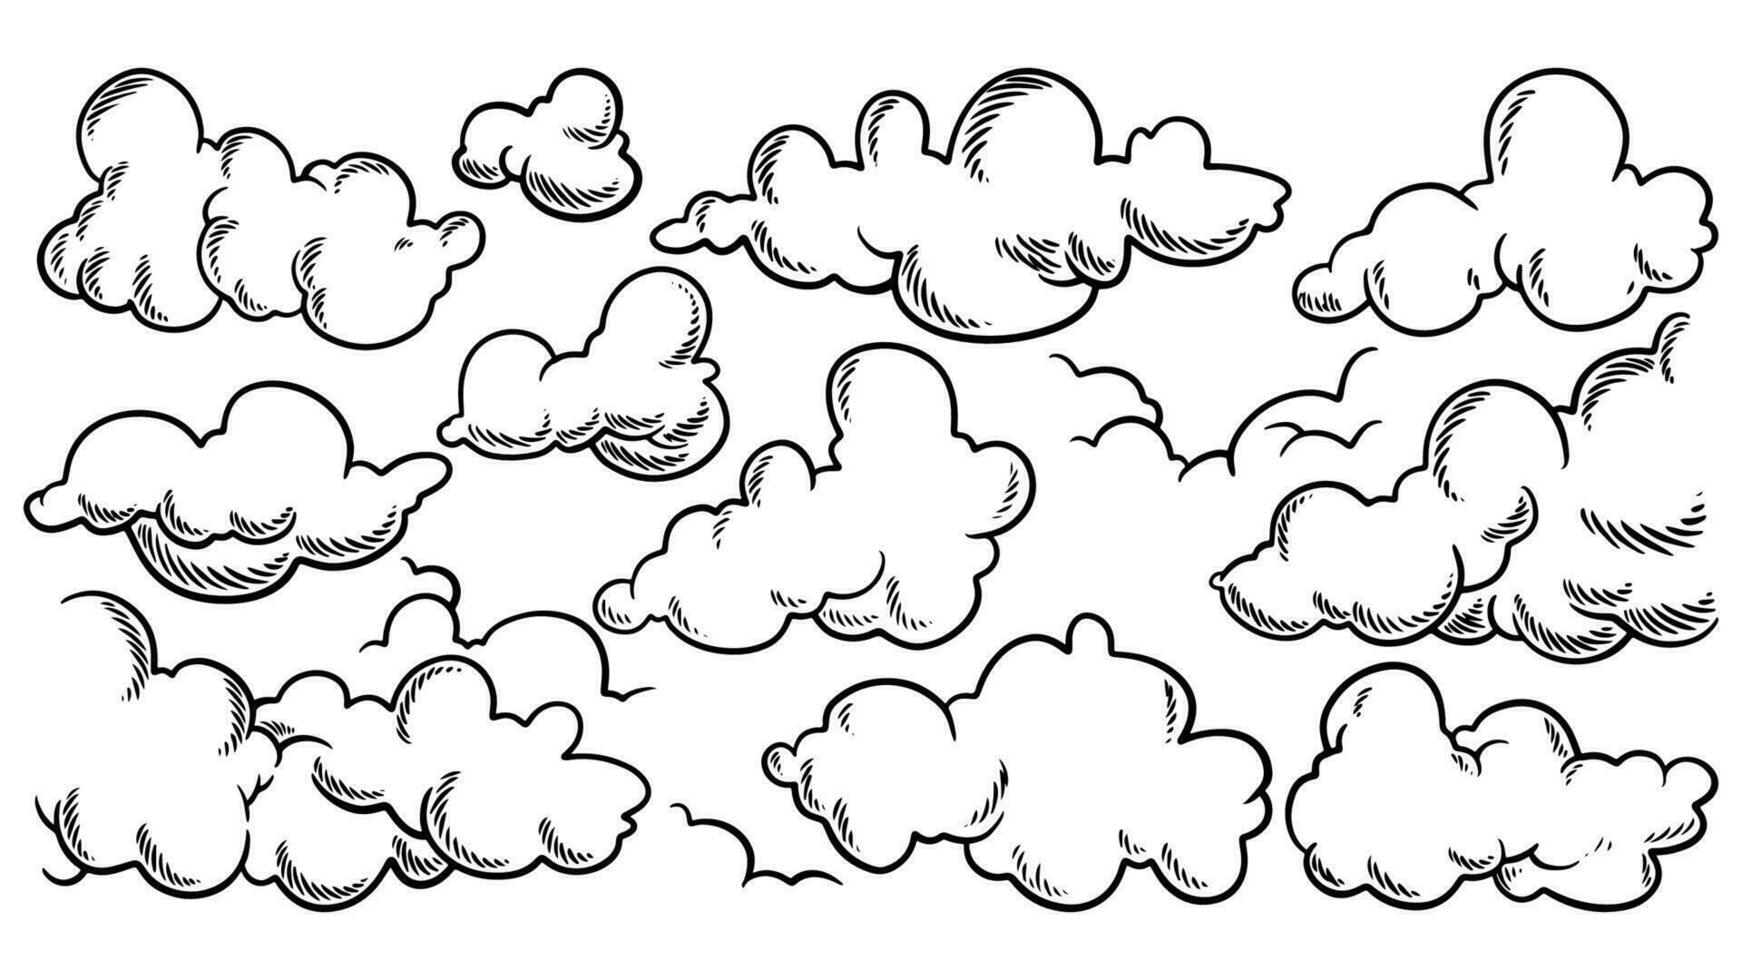 Clouds drawing set. Vector hand drawn cartoon of cloud.